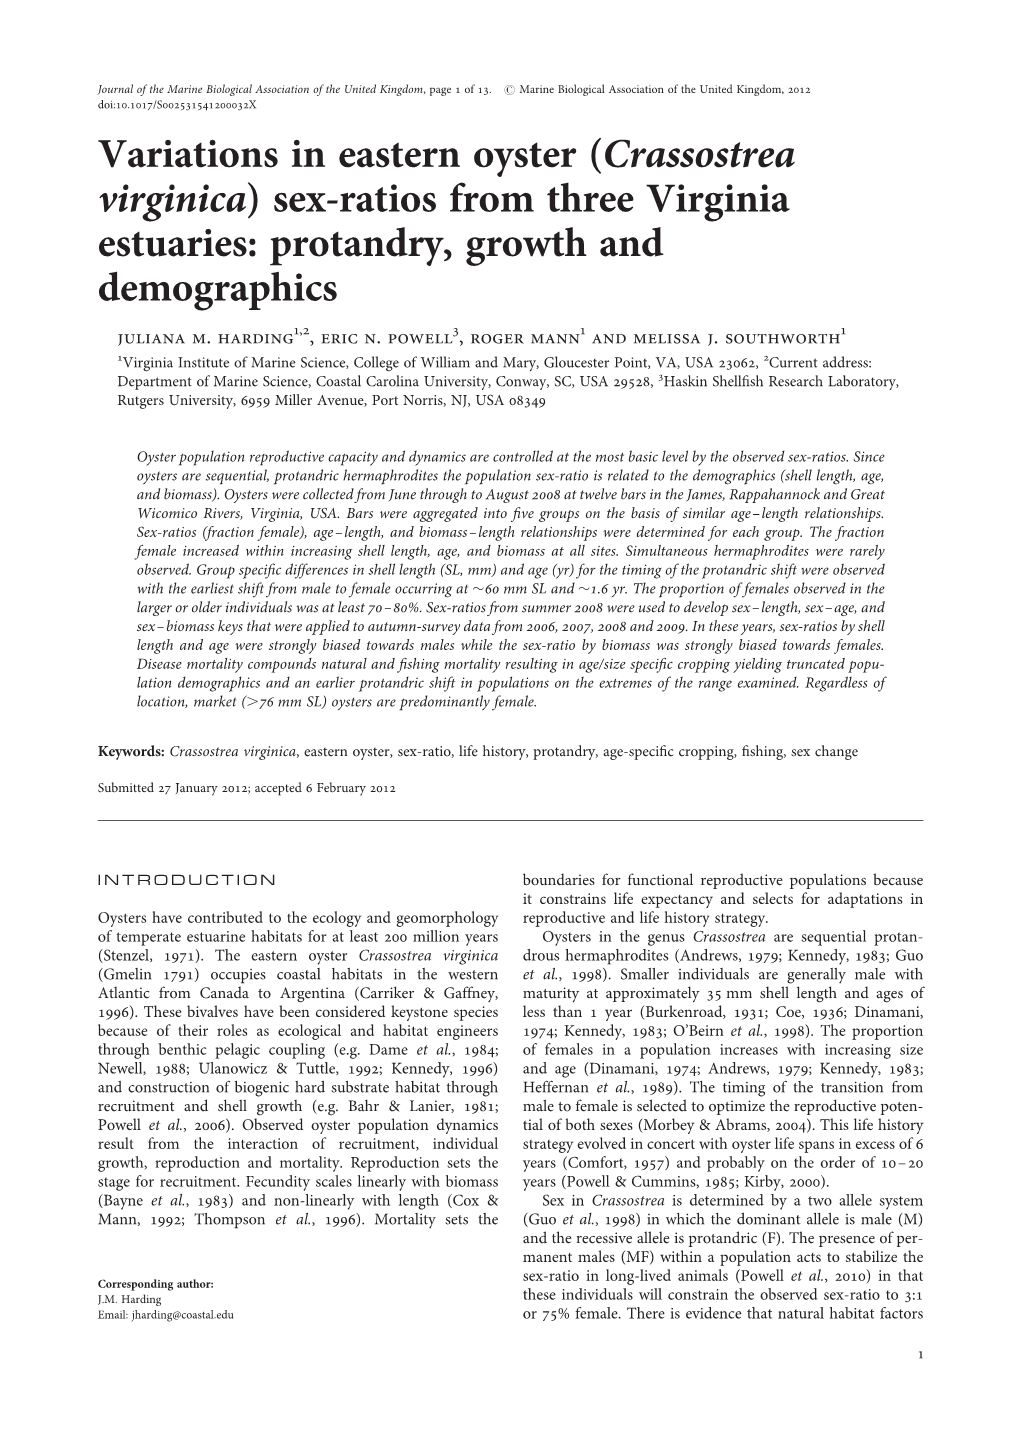 Variations in Eastern Oyster (Crassostrea Virginica) Sex-Ratios from Three Virginia Estuaries: Protandry, Growth and Demographics Juliana M